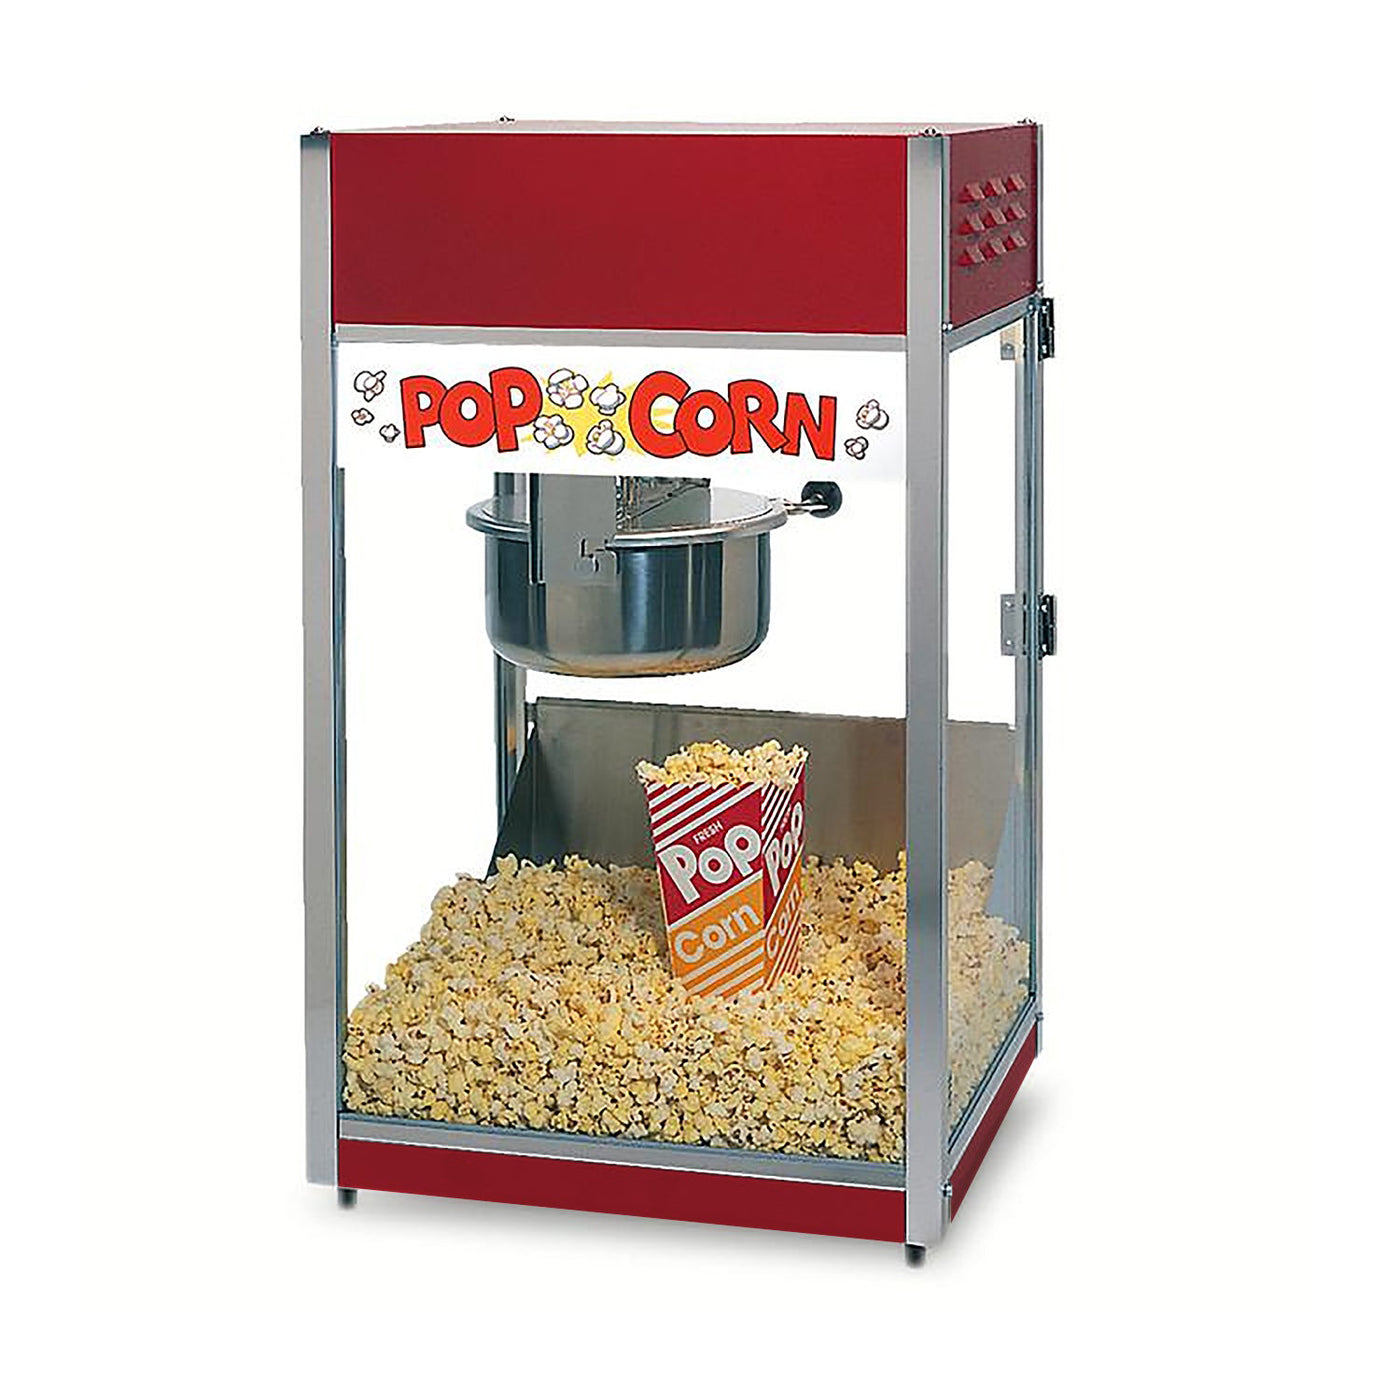 Popcon Maker Machine Buy at Best Price- 5 Core